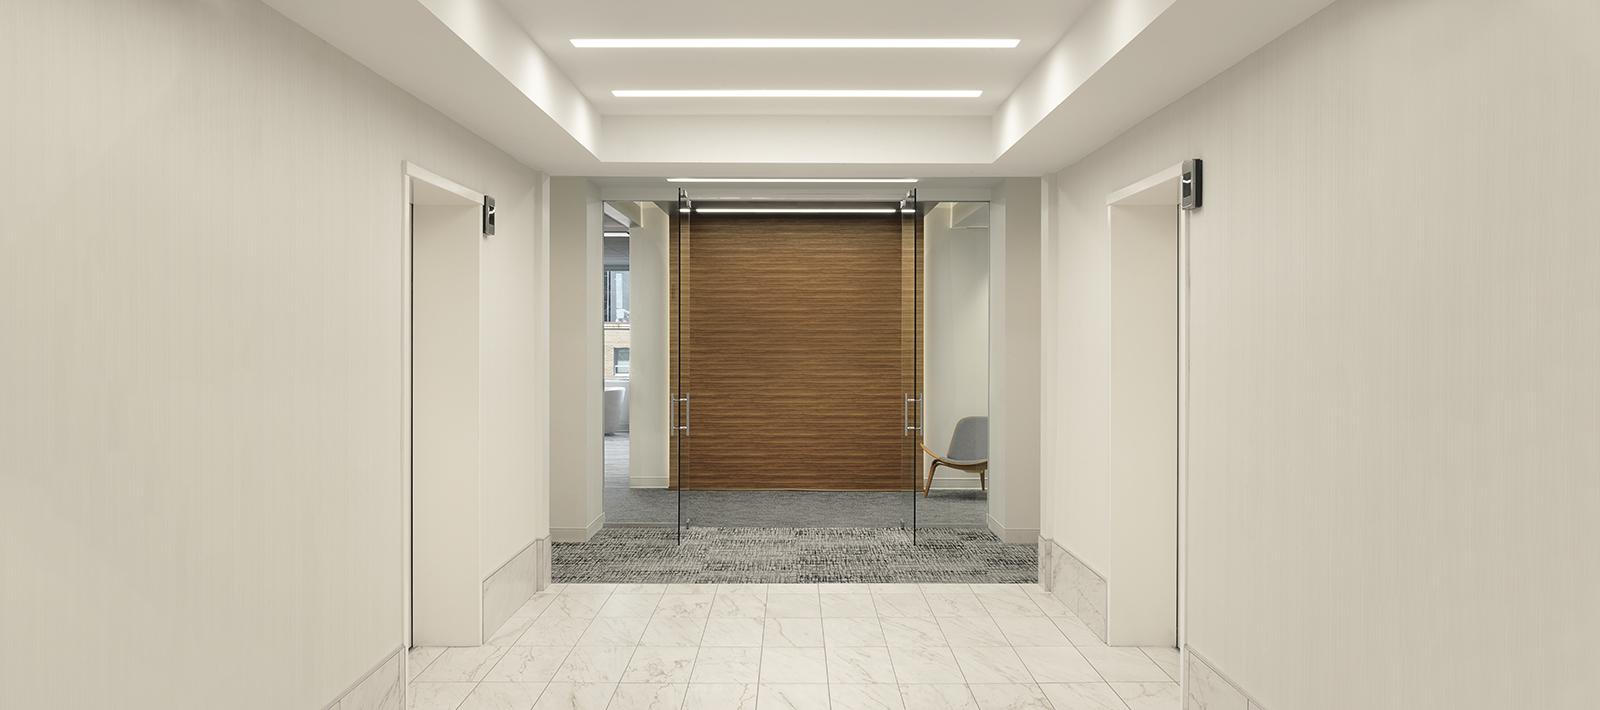 Hanley Corporate Tower Elevator Corridor Seem 6